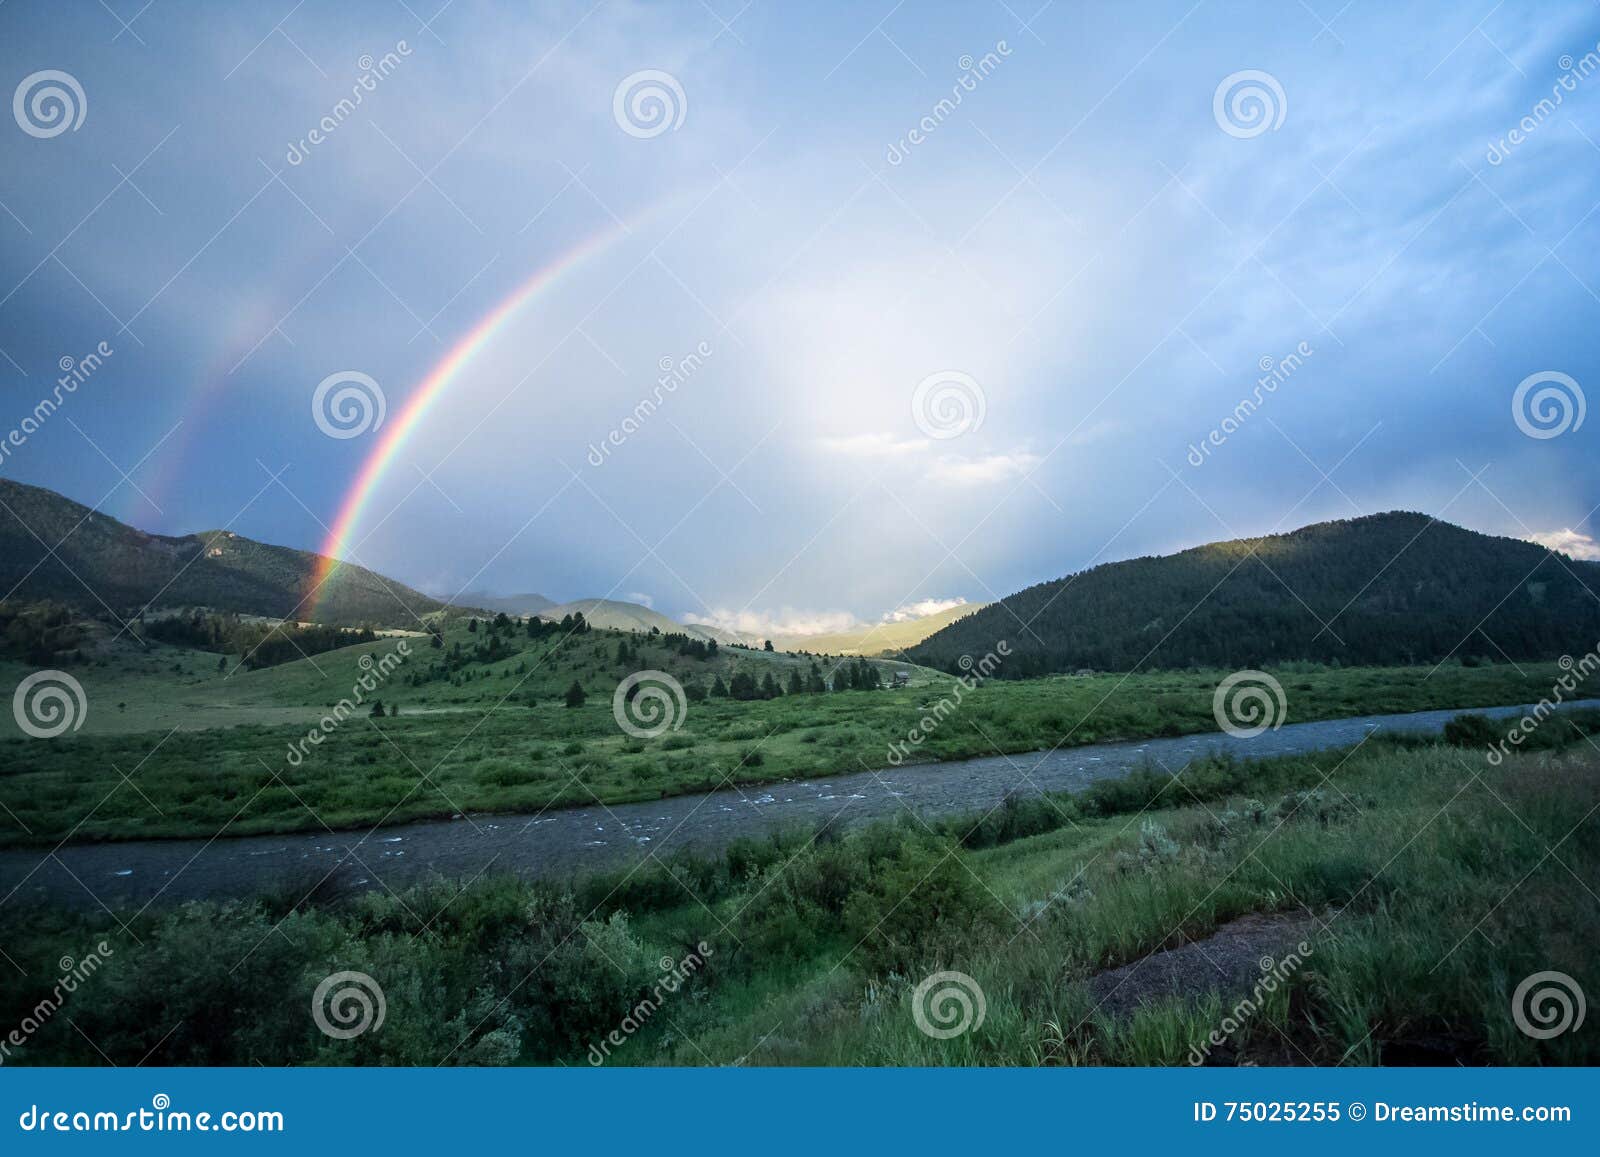 double rainbow over gallatin river, montana